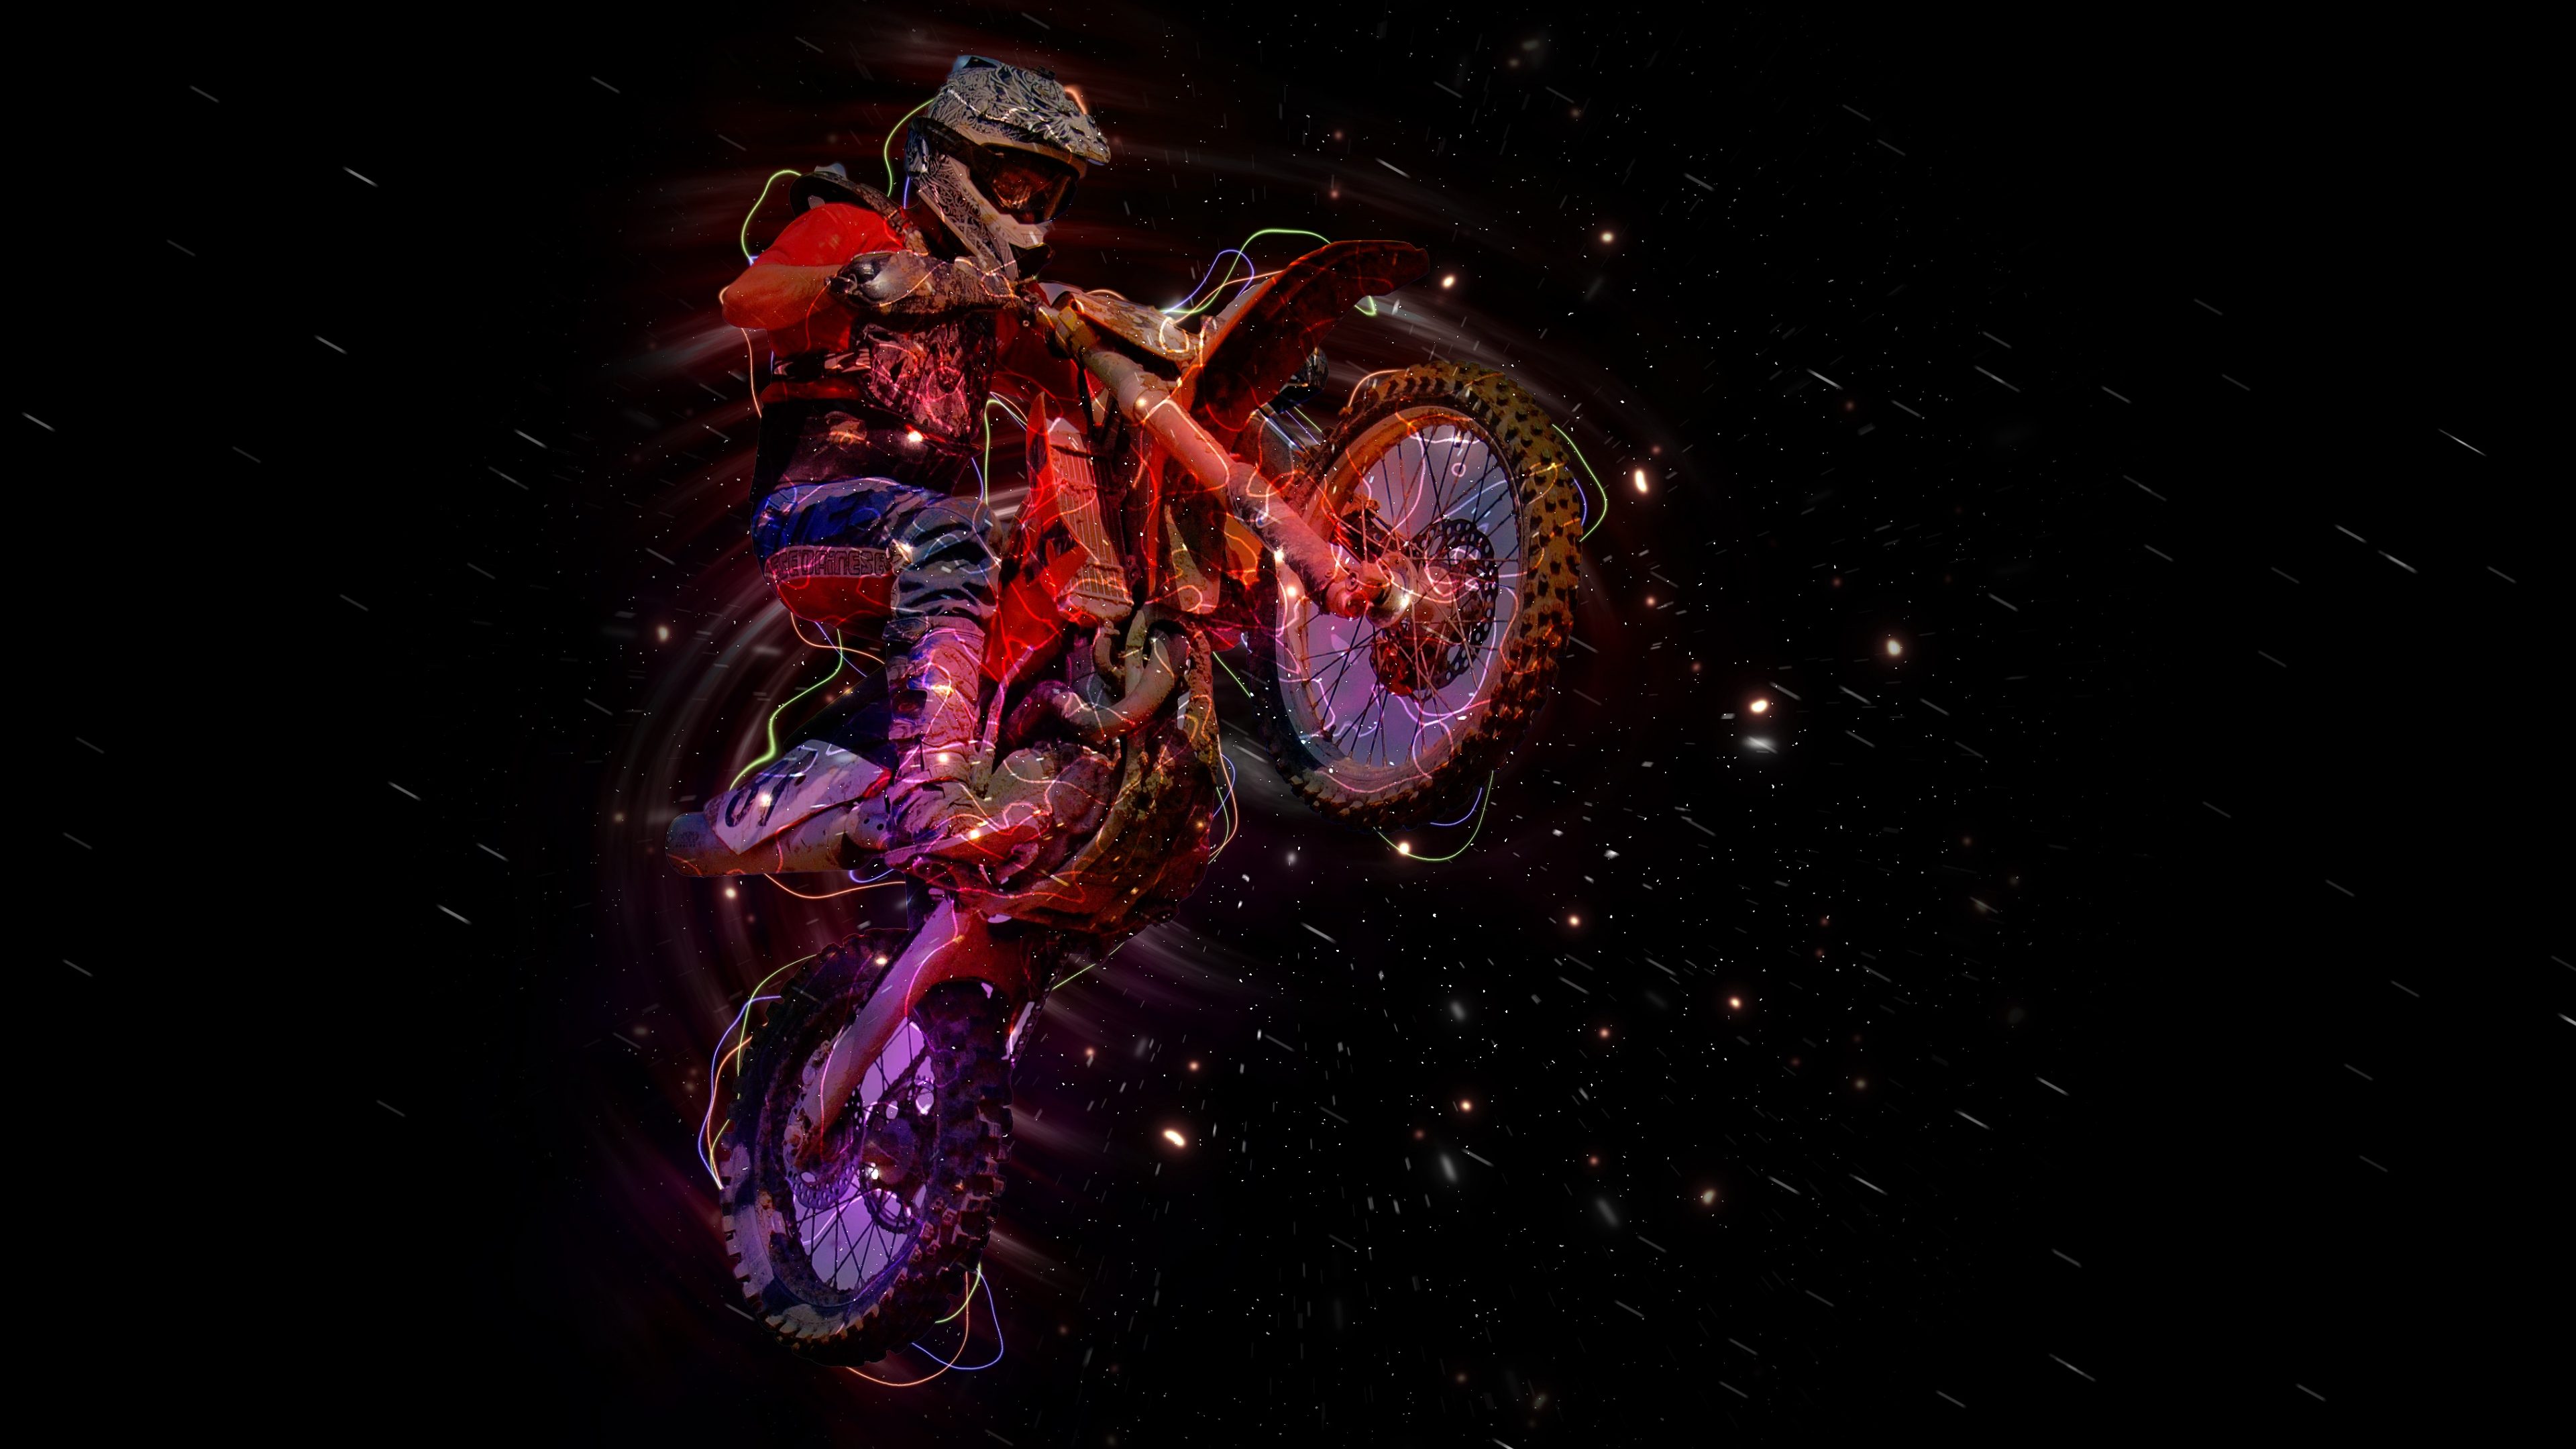 Motocross 4K UHD Wallpaper